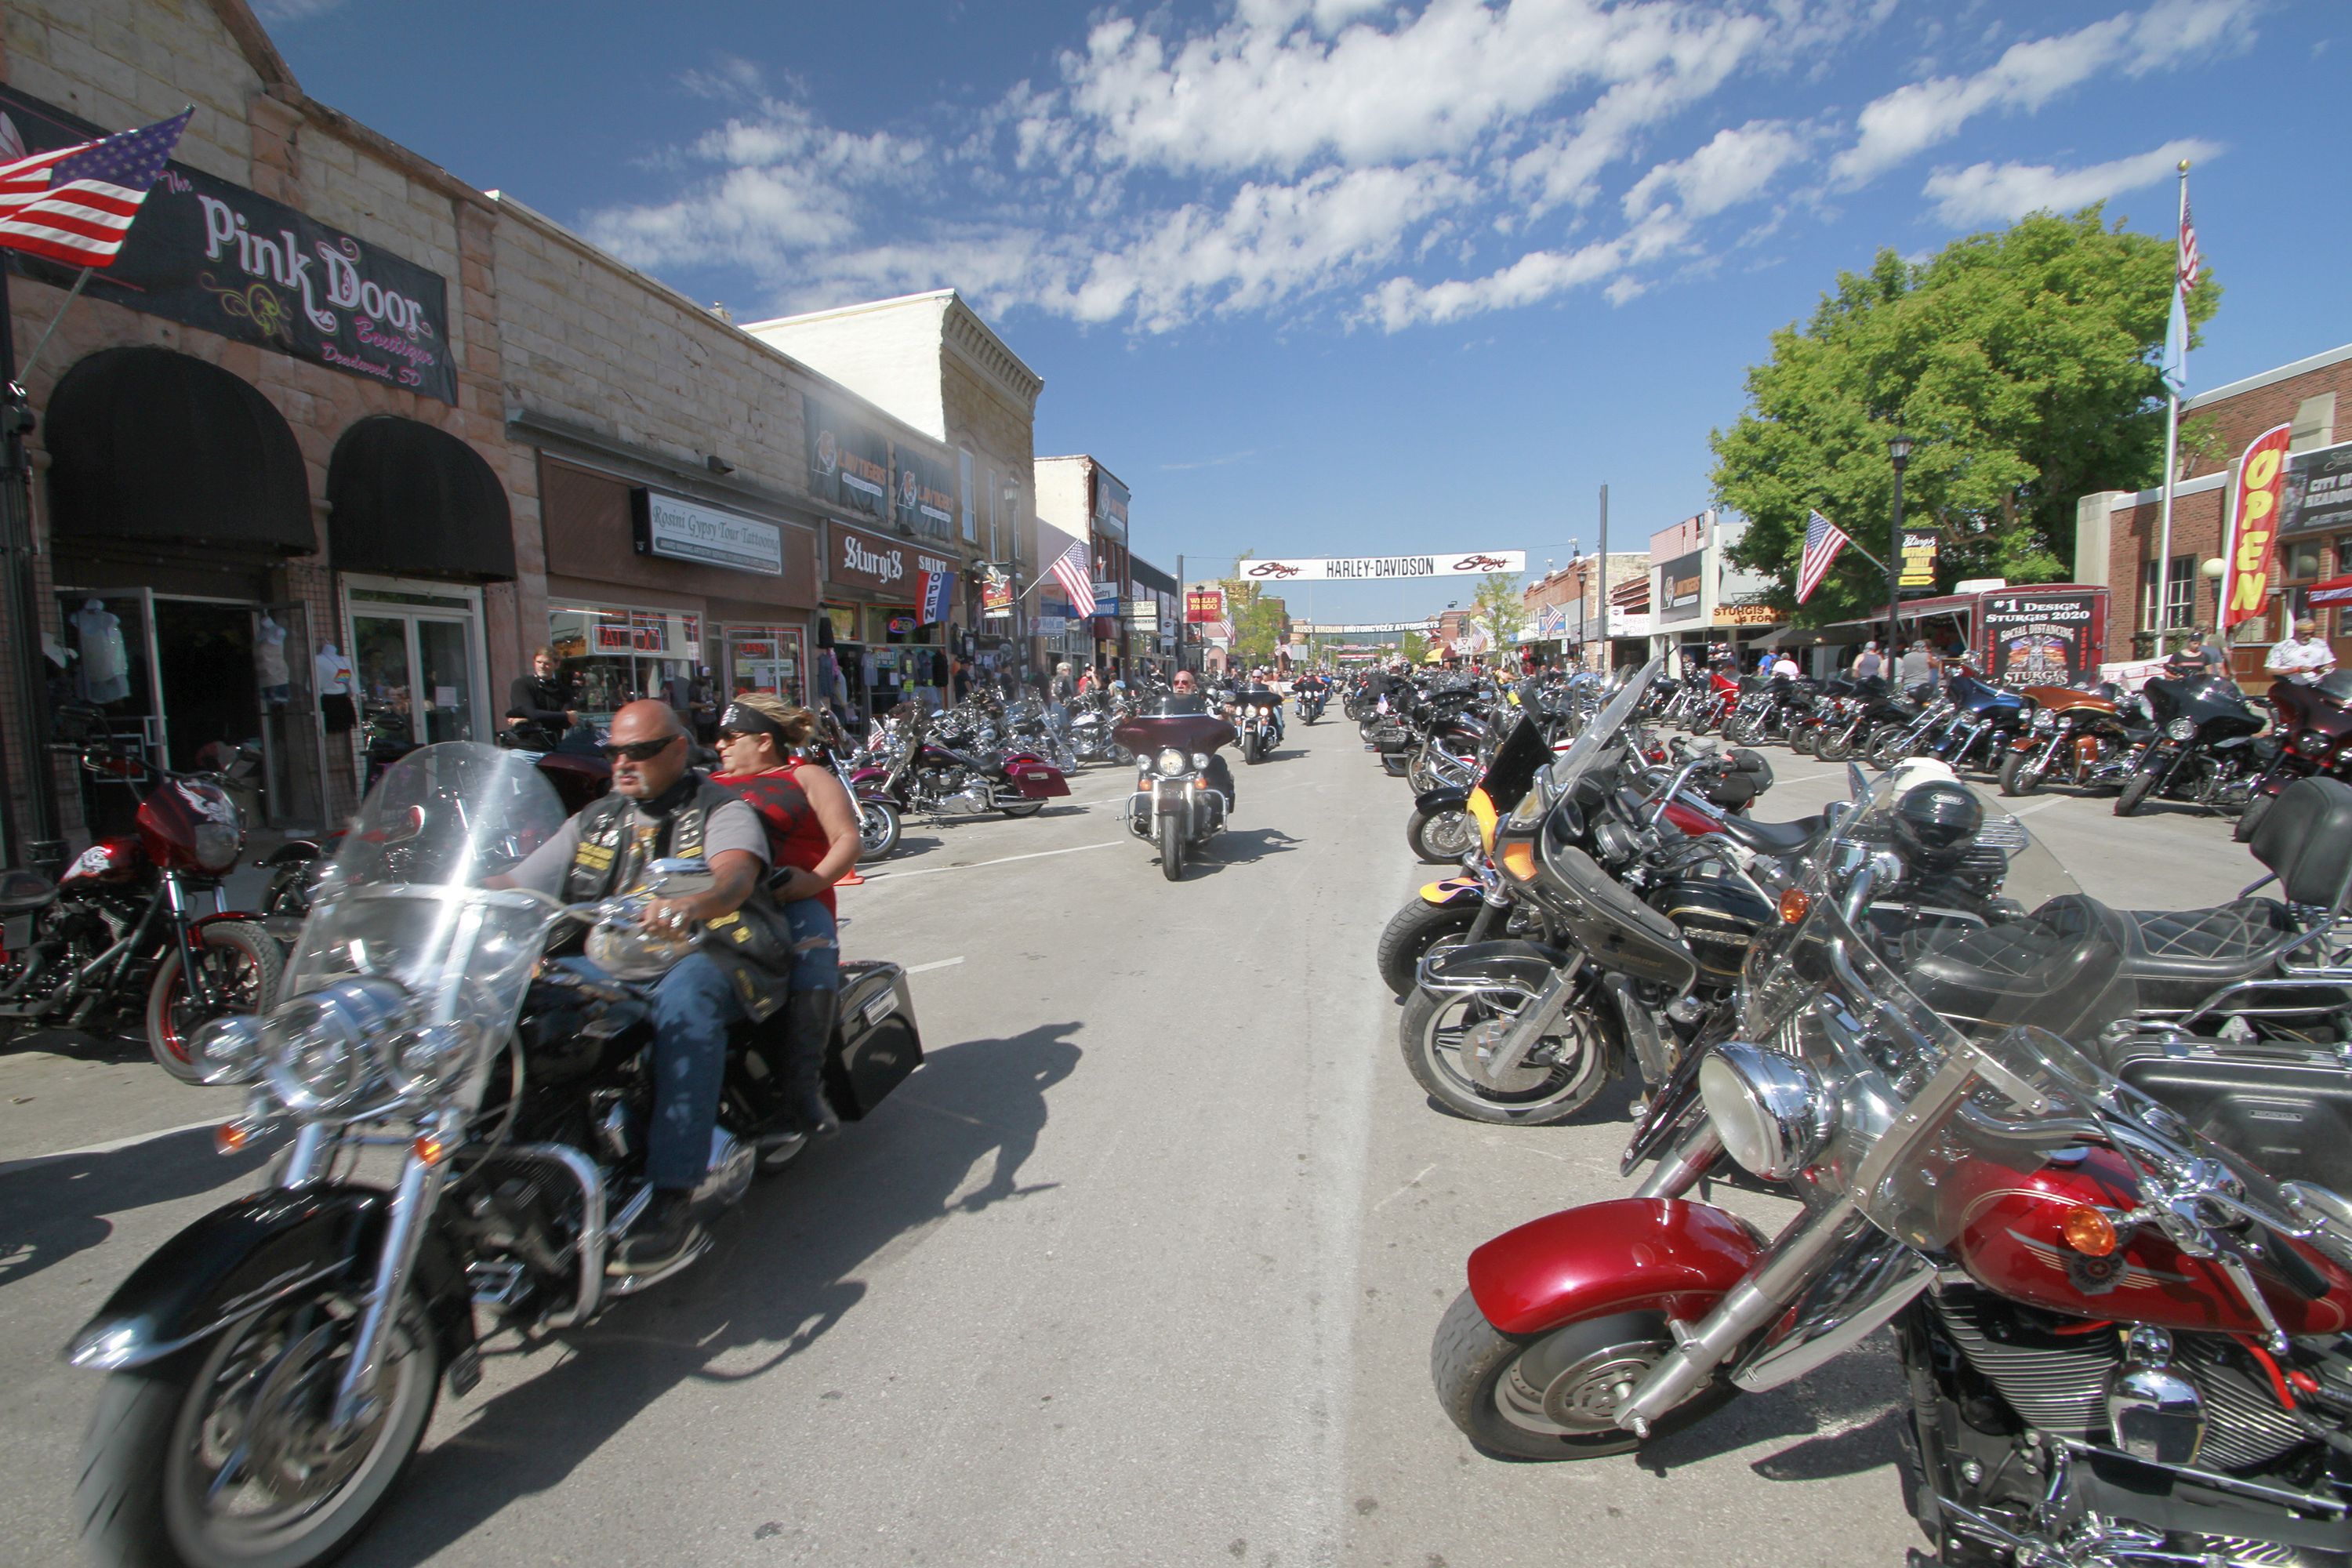 A major experiment': Thousands of bikers arrive at Sturgis, South Dakota